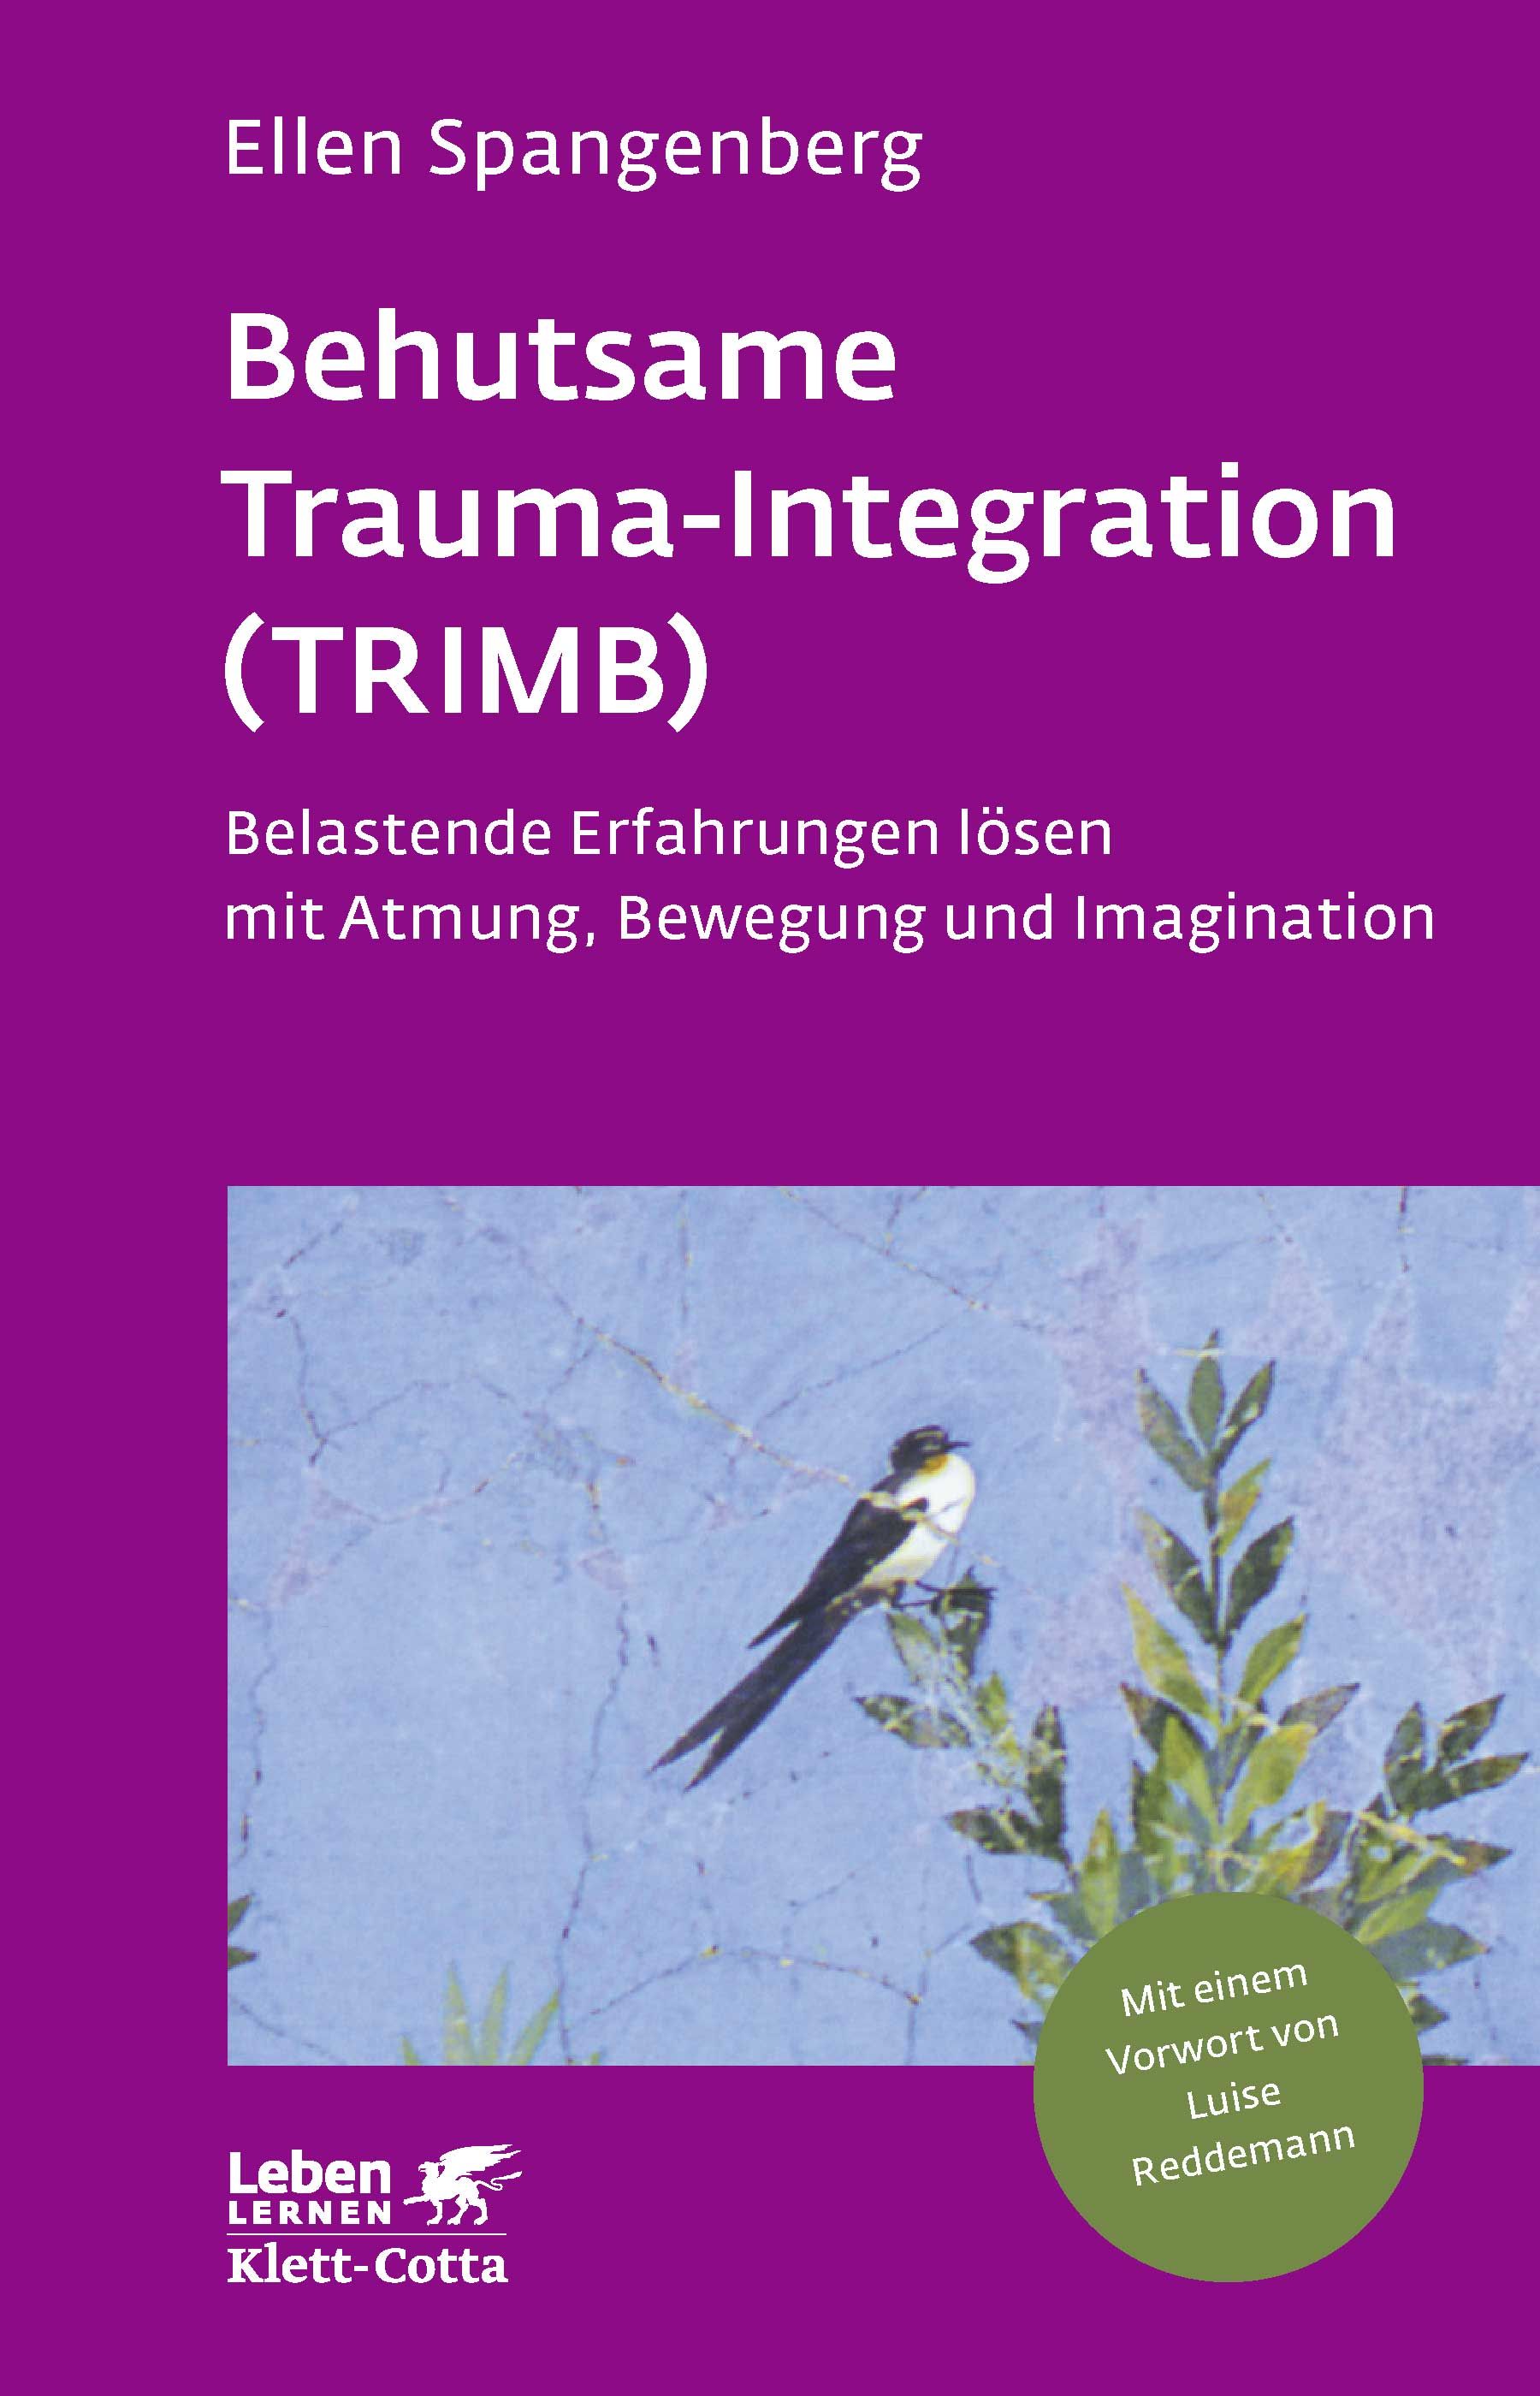 Behutsame Trauma-Integration (TRIMB)